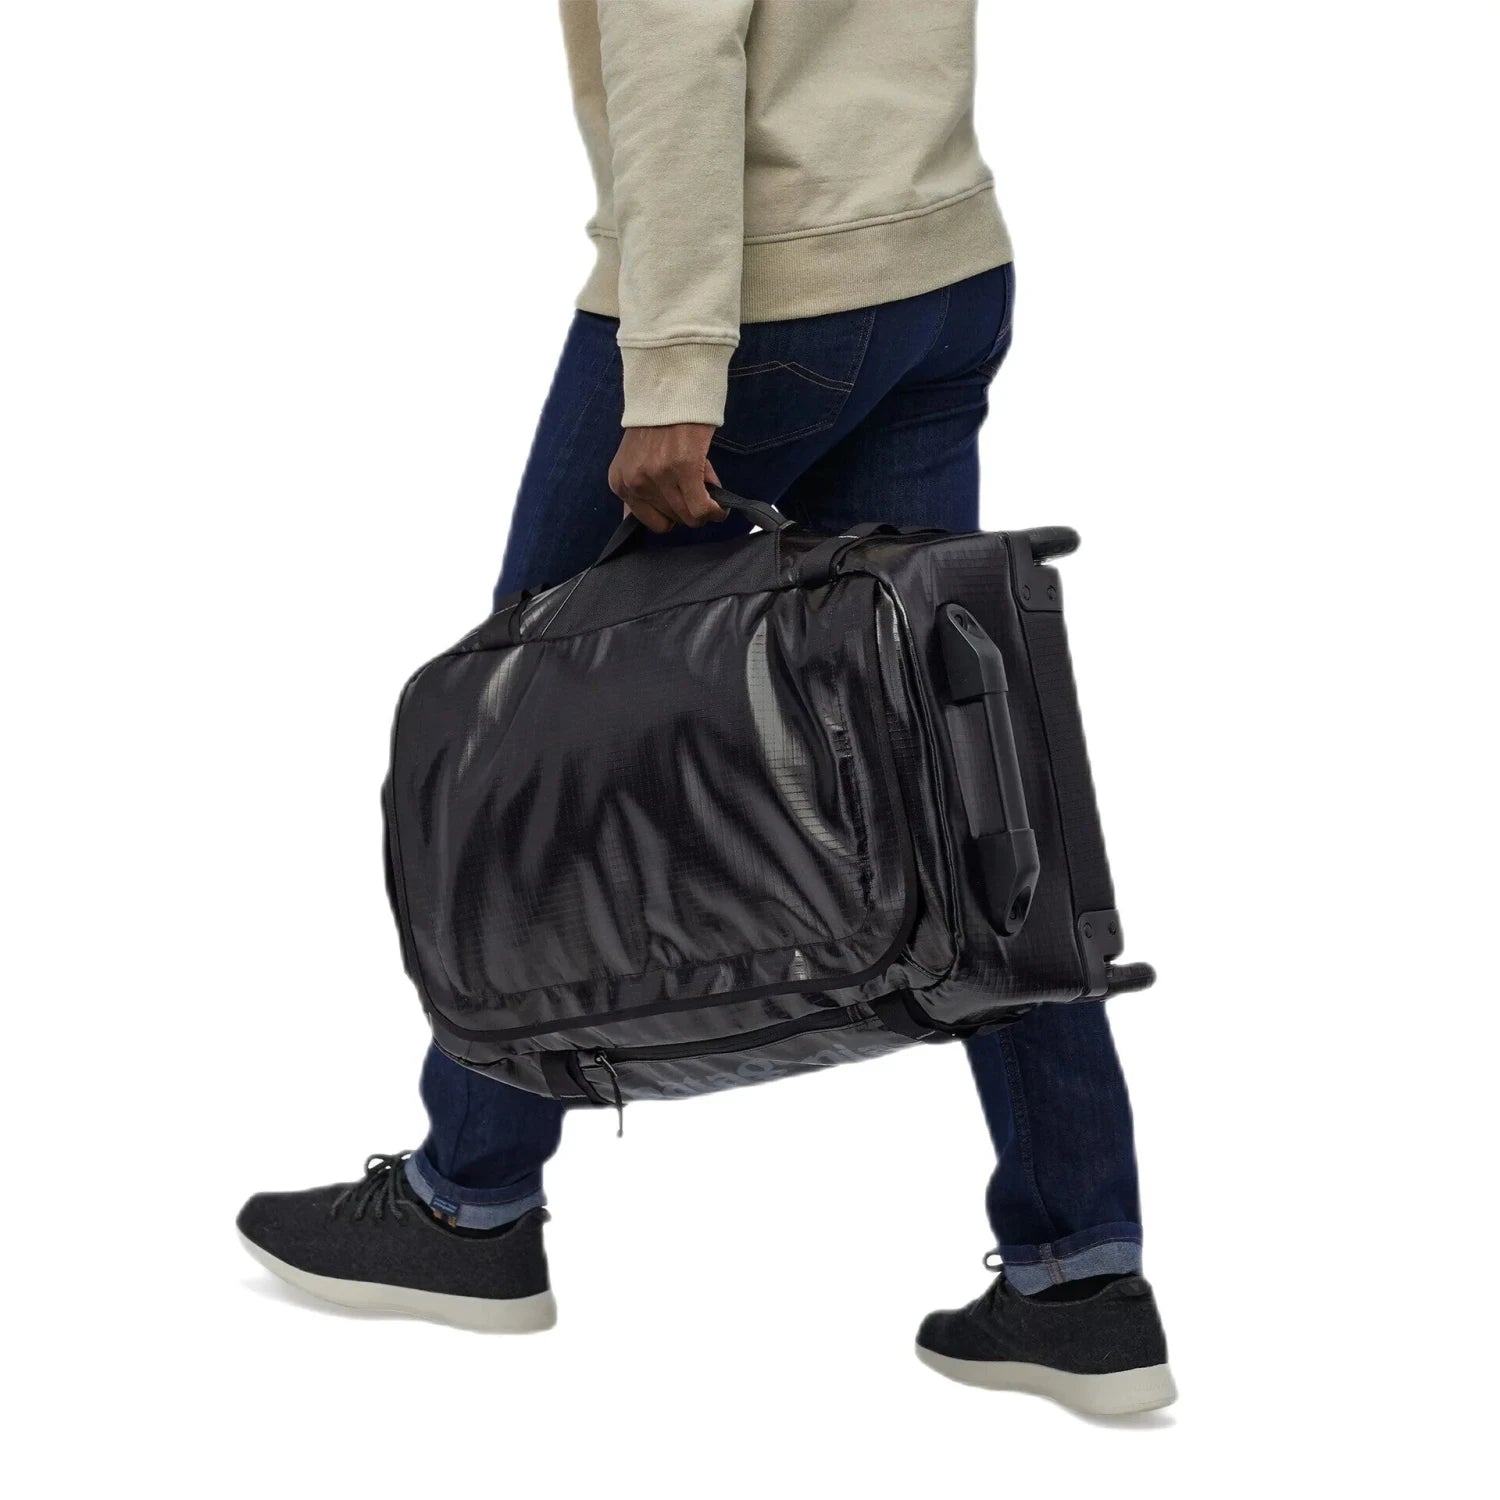 Patagonia Black Hole® Wheeled Duffel Bag 40L, Black, side view of model holding bag